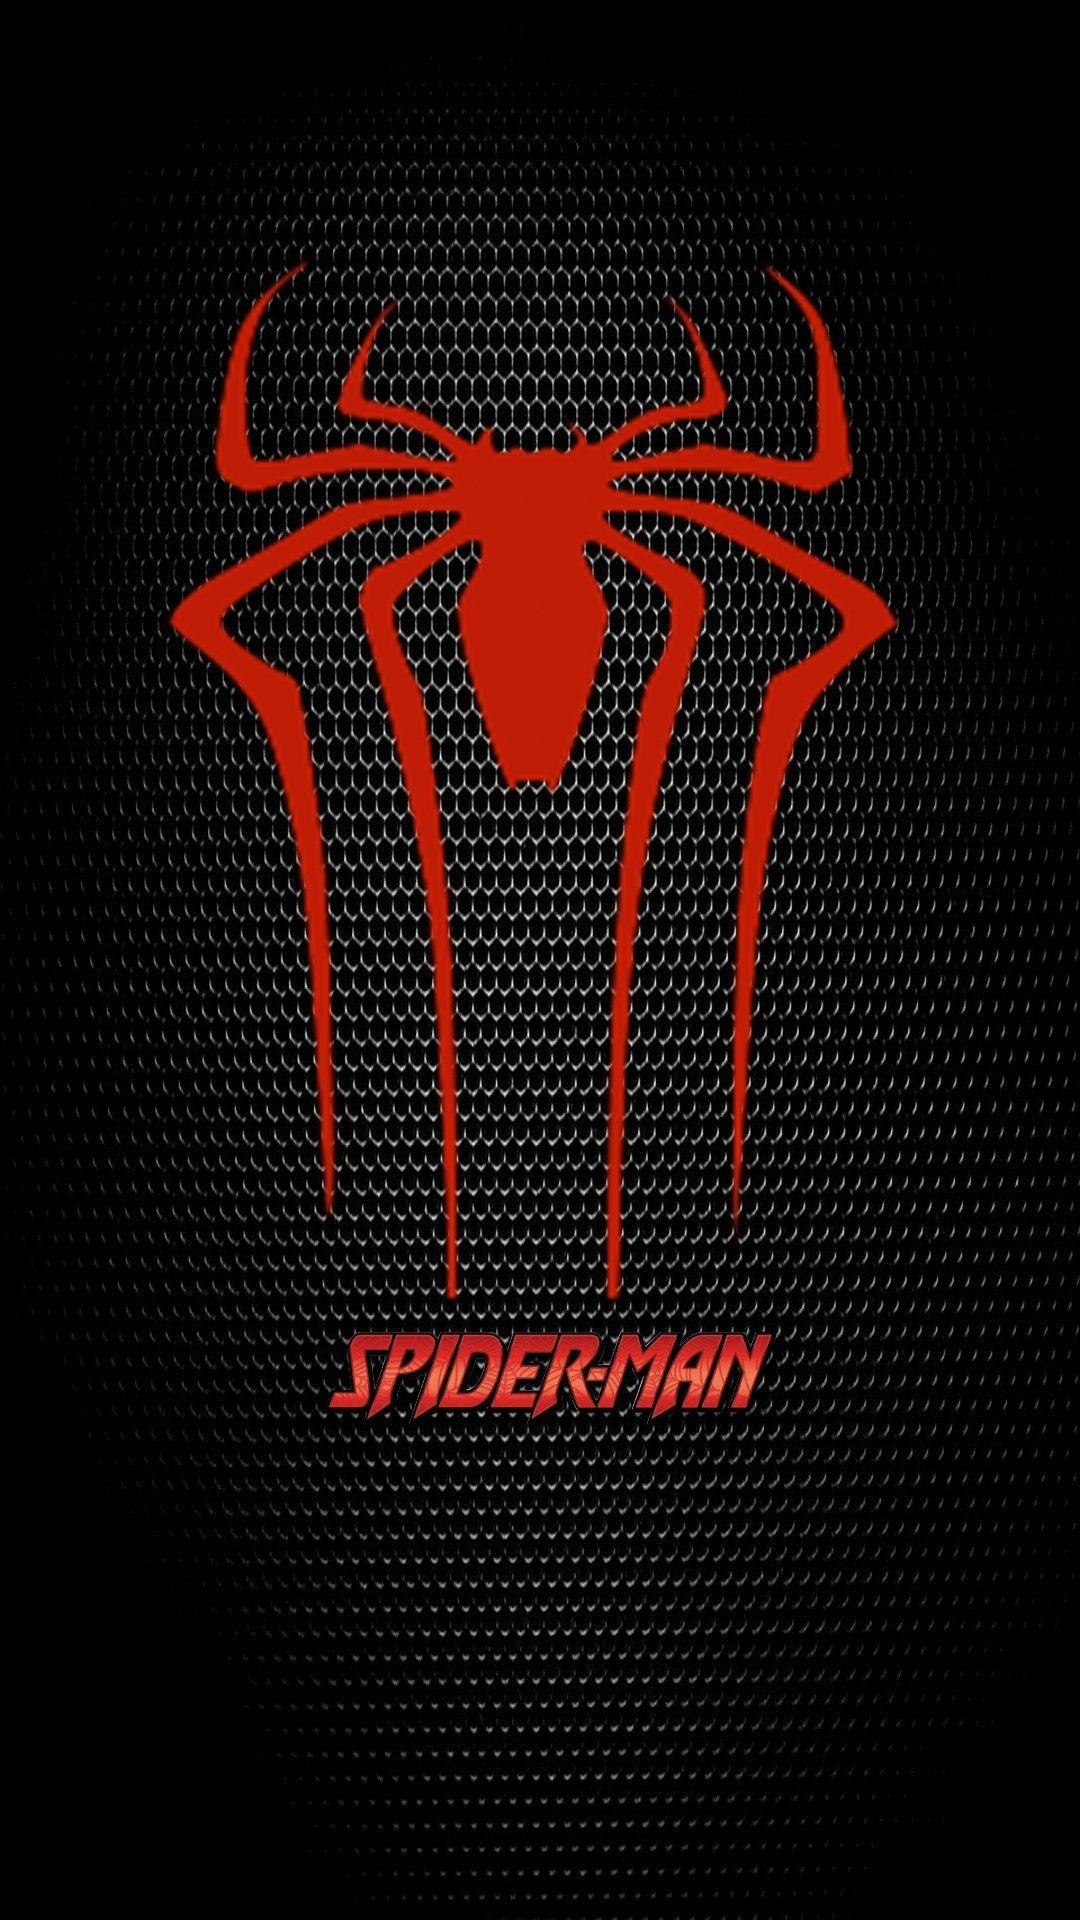 Logo #Spiderman #Comics Spiderman Logo. Come to the dork side